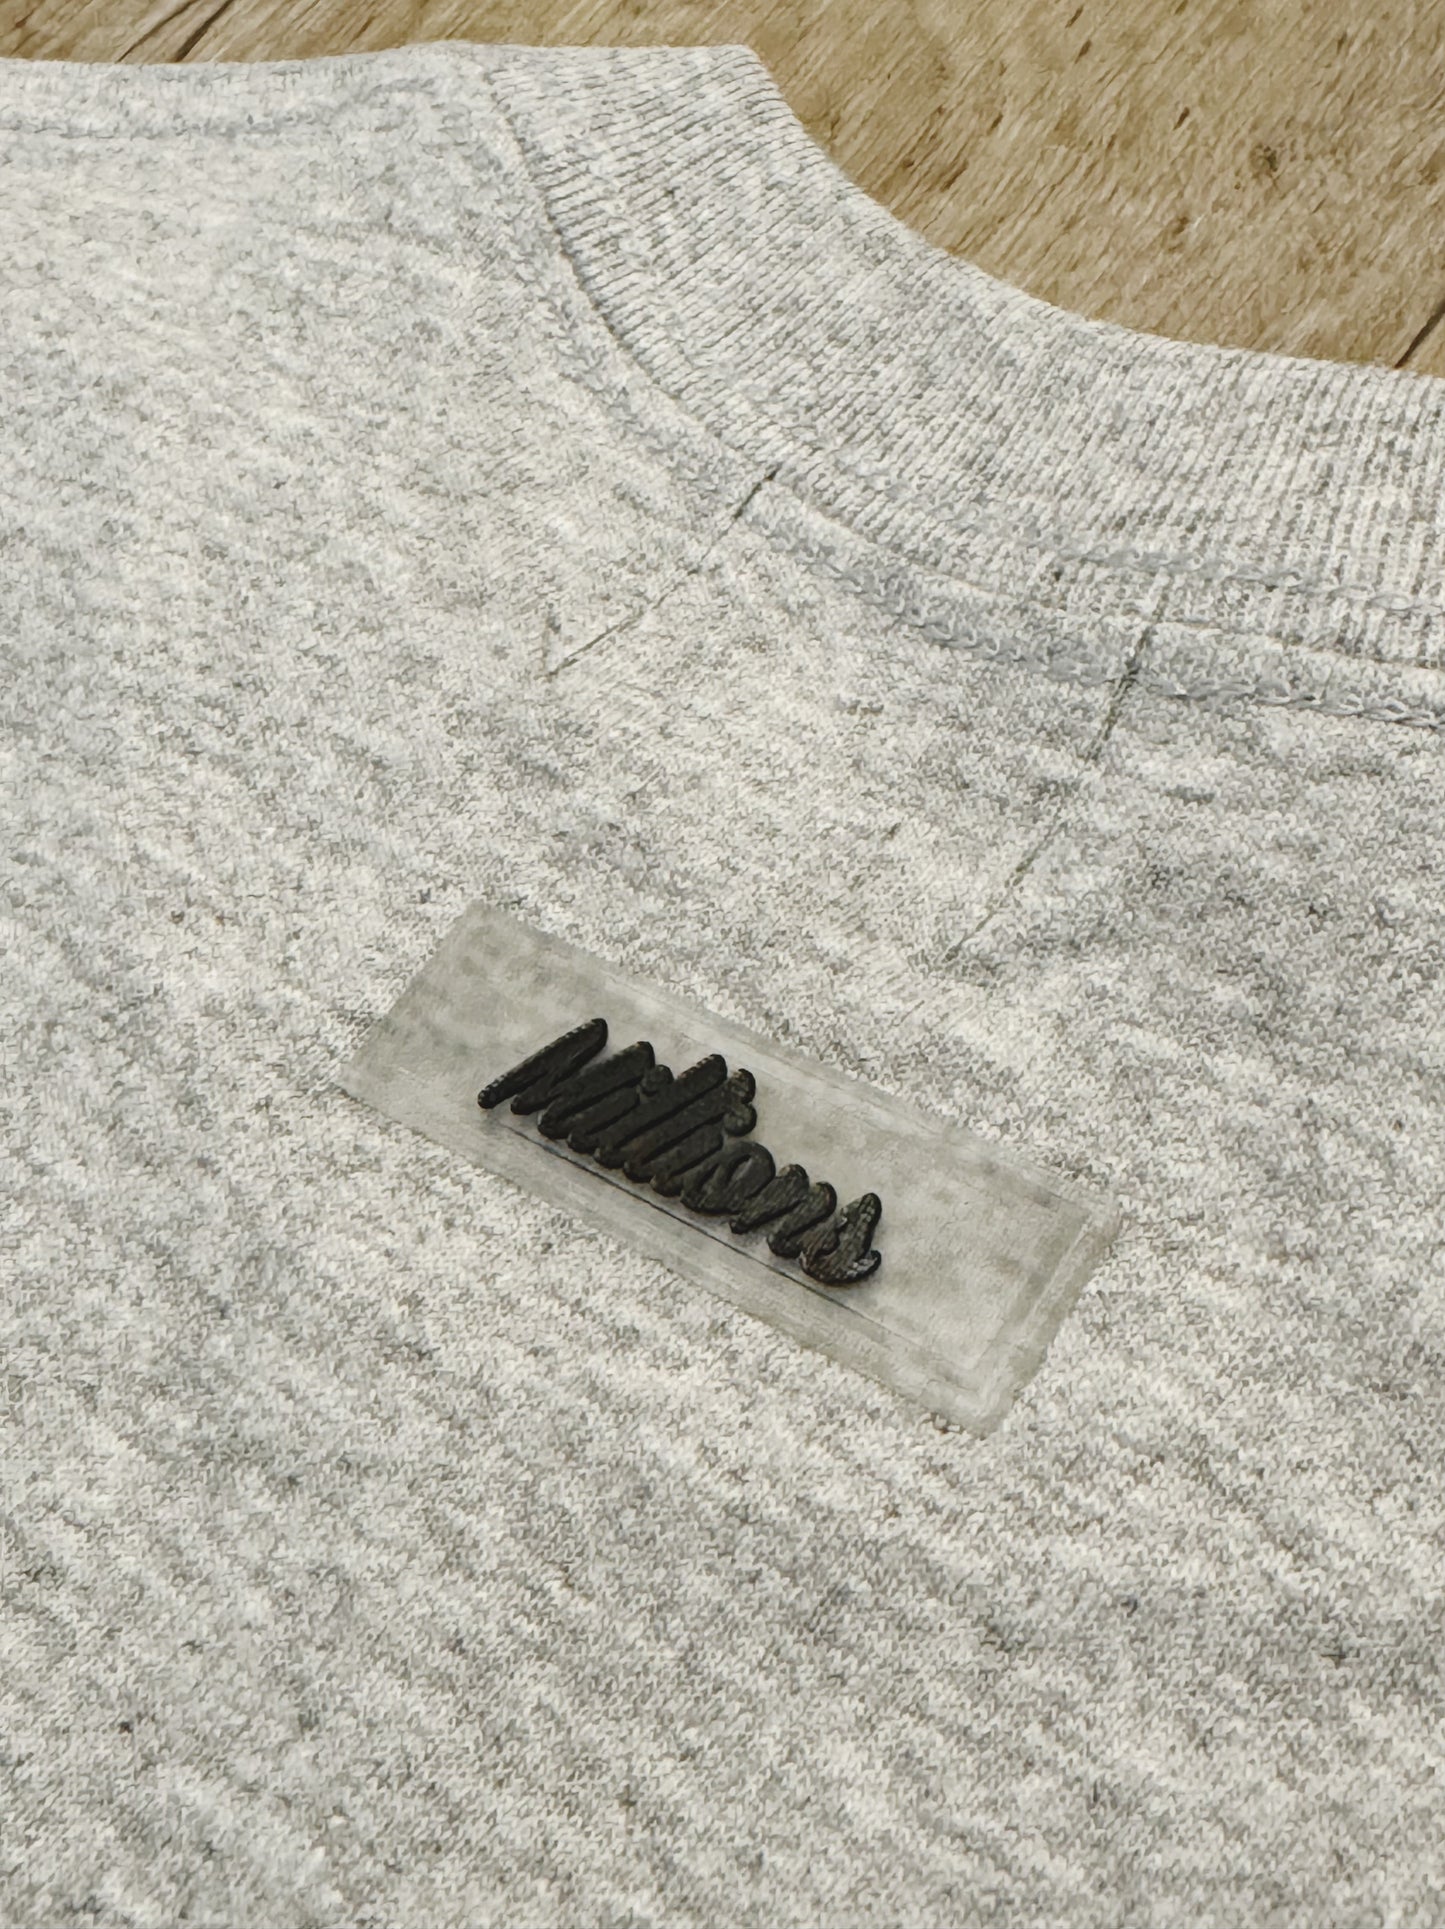 Millions Original 13” 3D Silicone | Grey/Dark Grey T-shirt